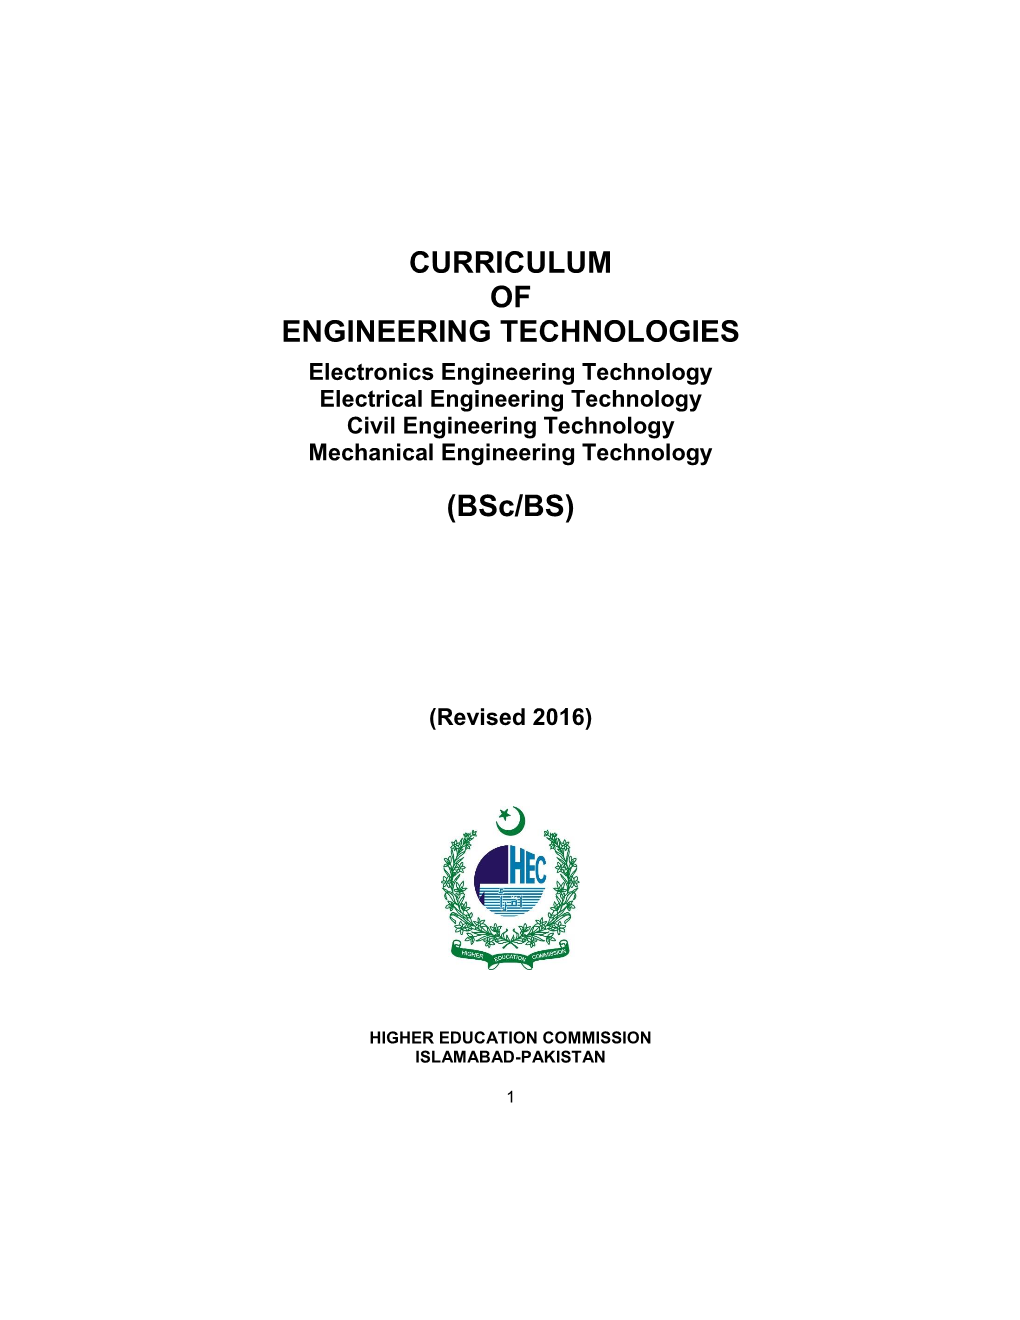 CURRICULUM of ENGINEERING TECHNOLOGIES (Bsc/BS)